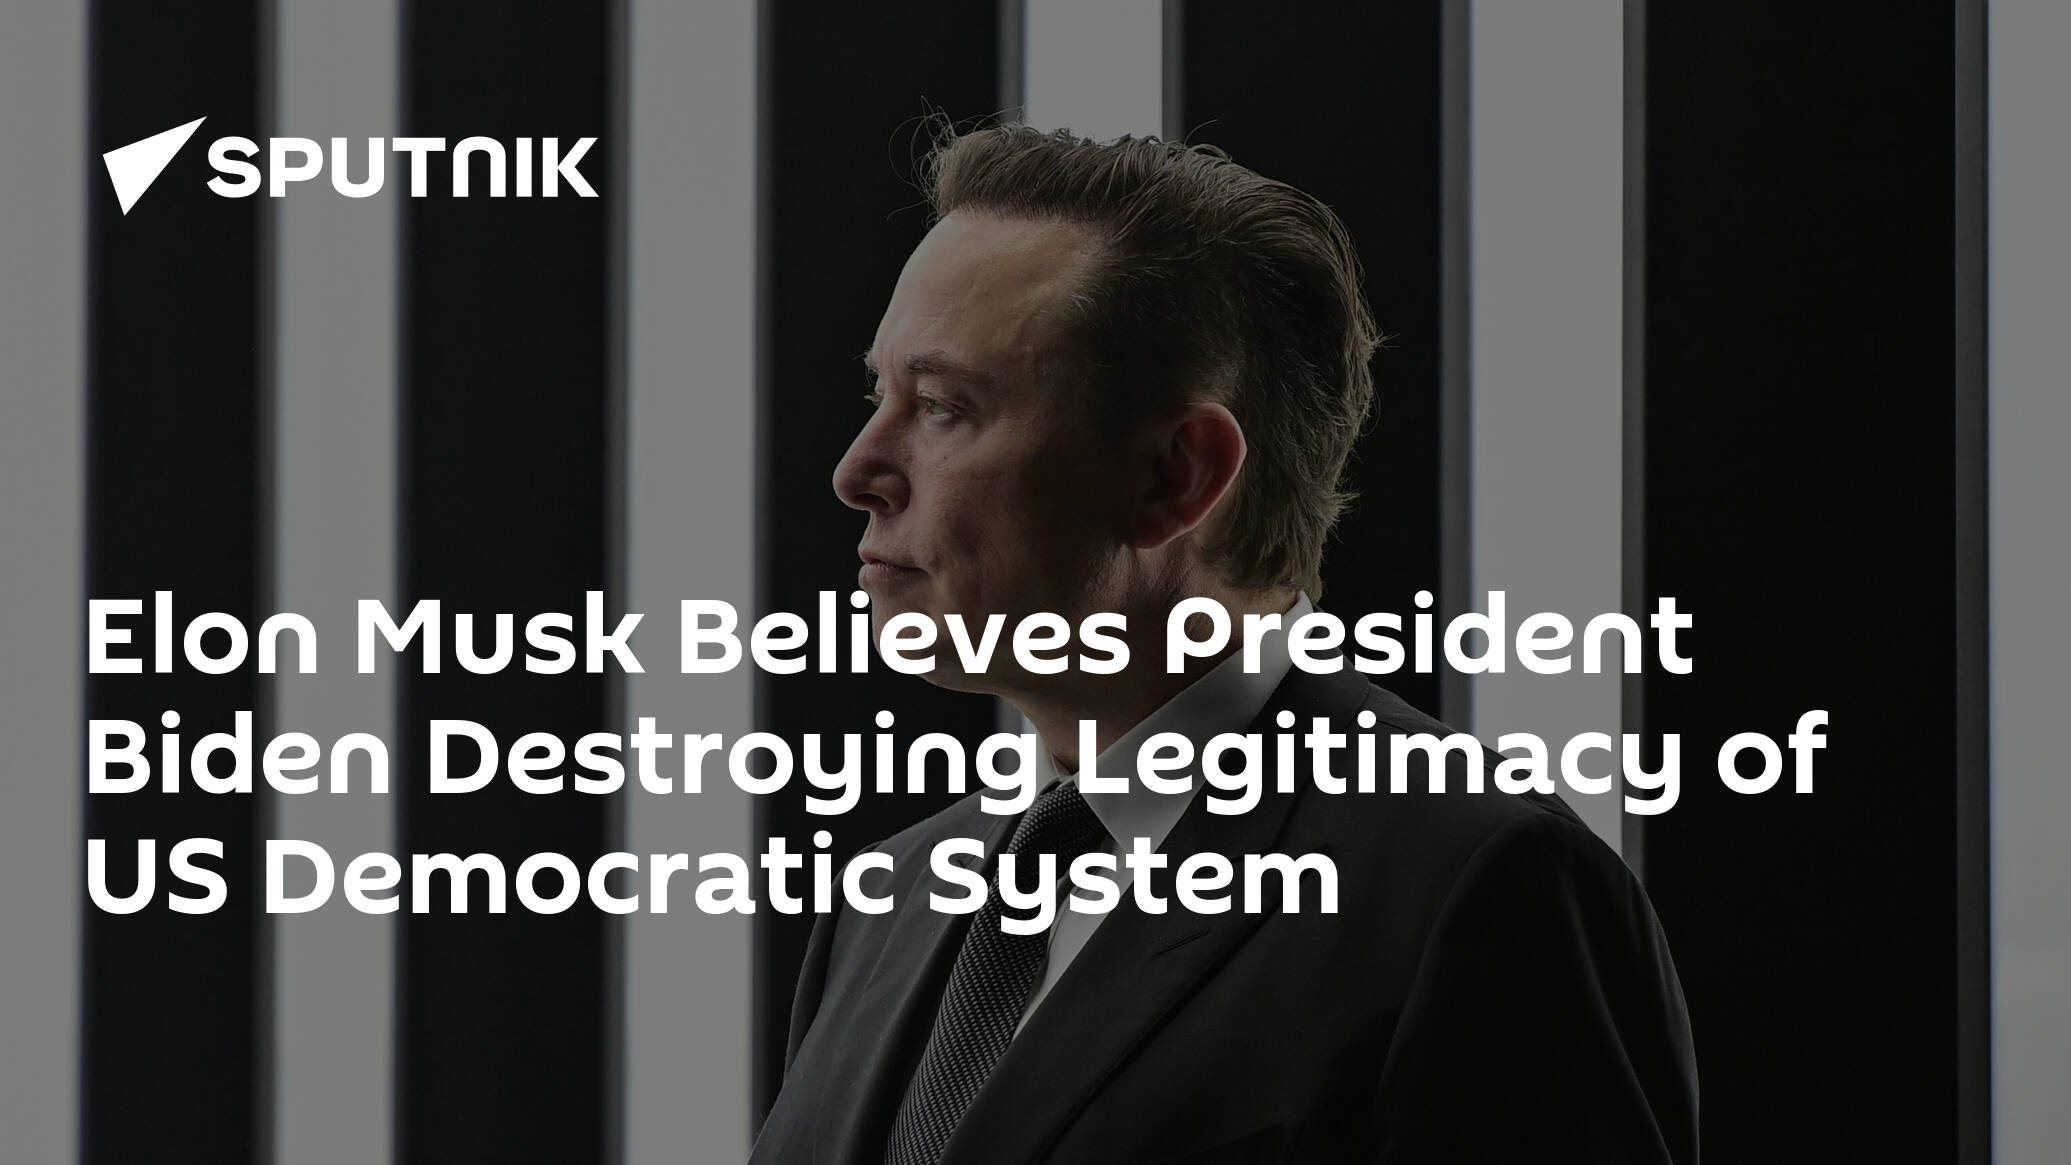 Elon Musk Believes President Biden Destroying Legitimacy of US Democratic System